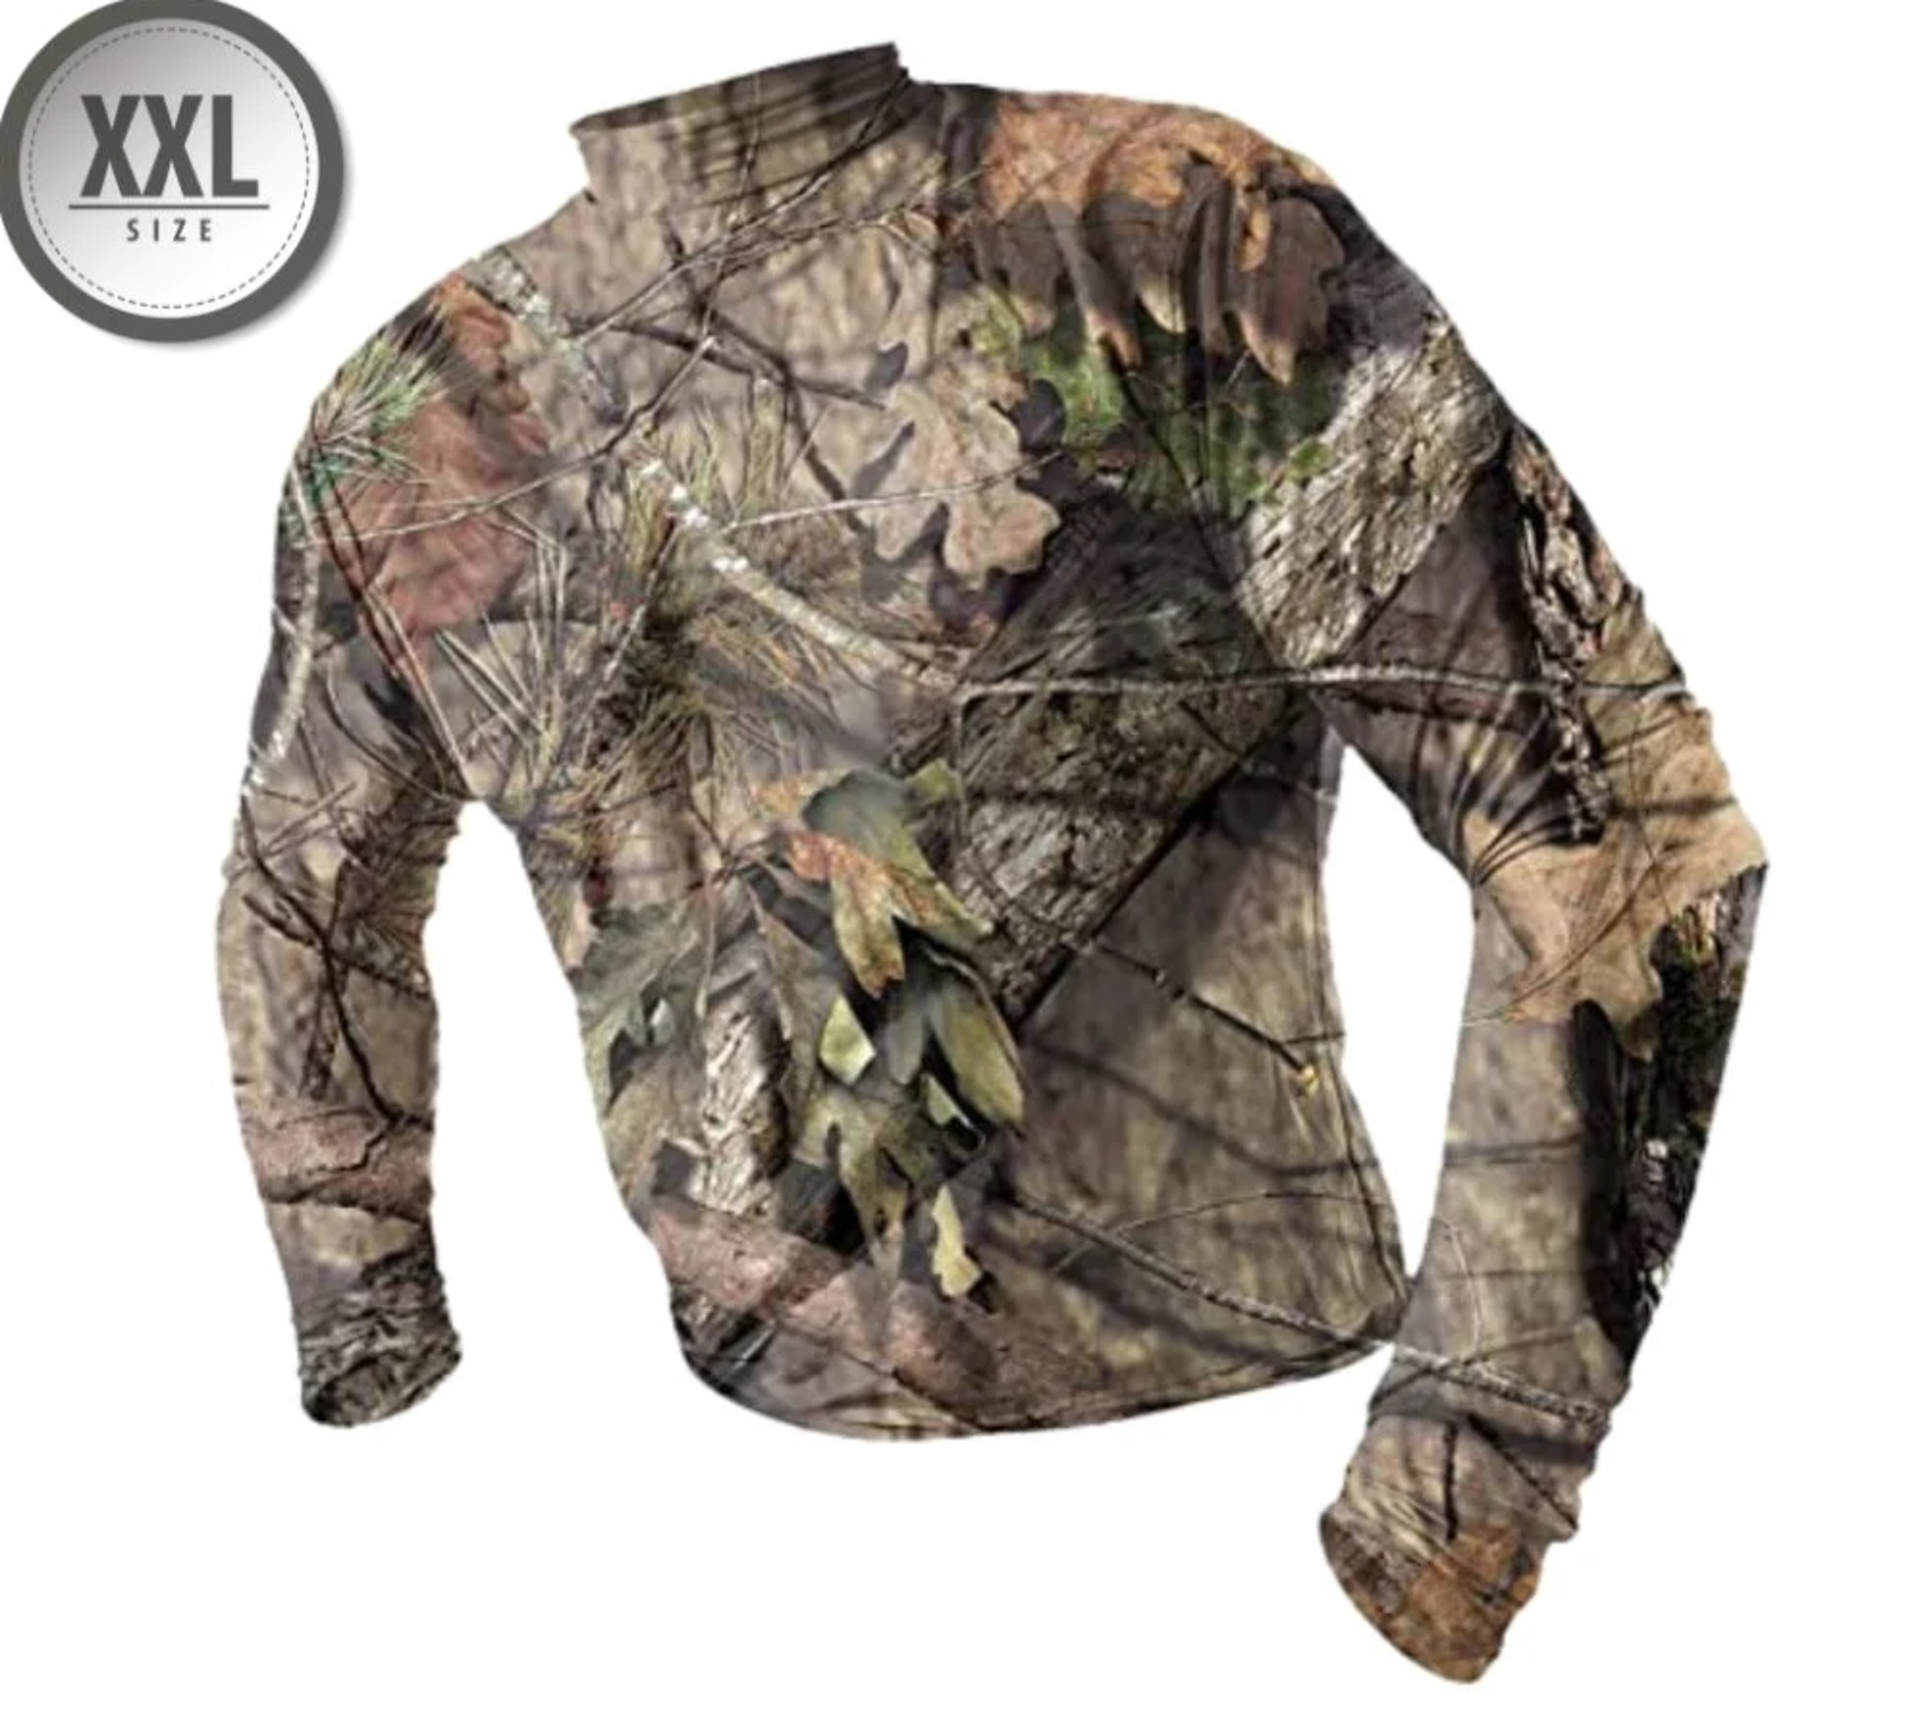 Rynoskin Hunting and Outdoor Long Sleeve Shirt - Mossy Oak